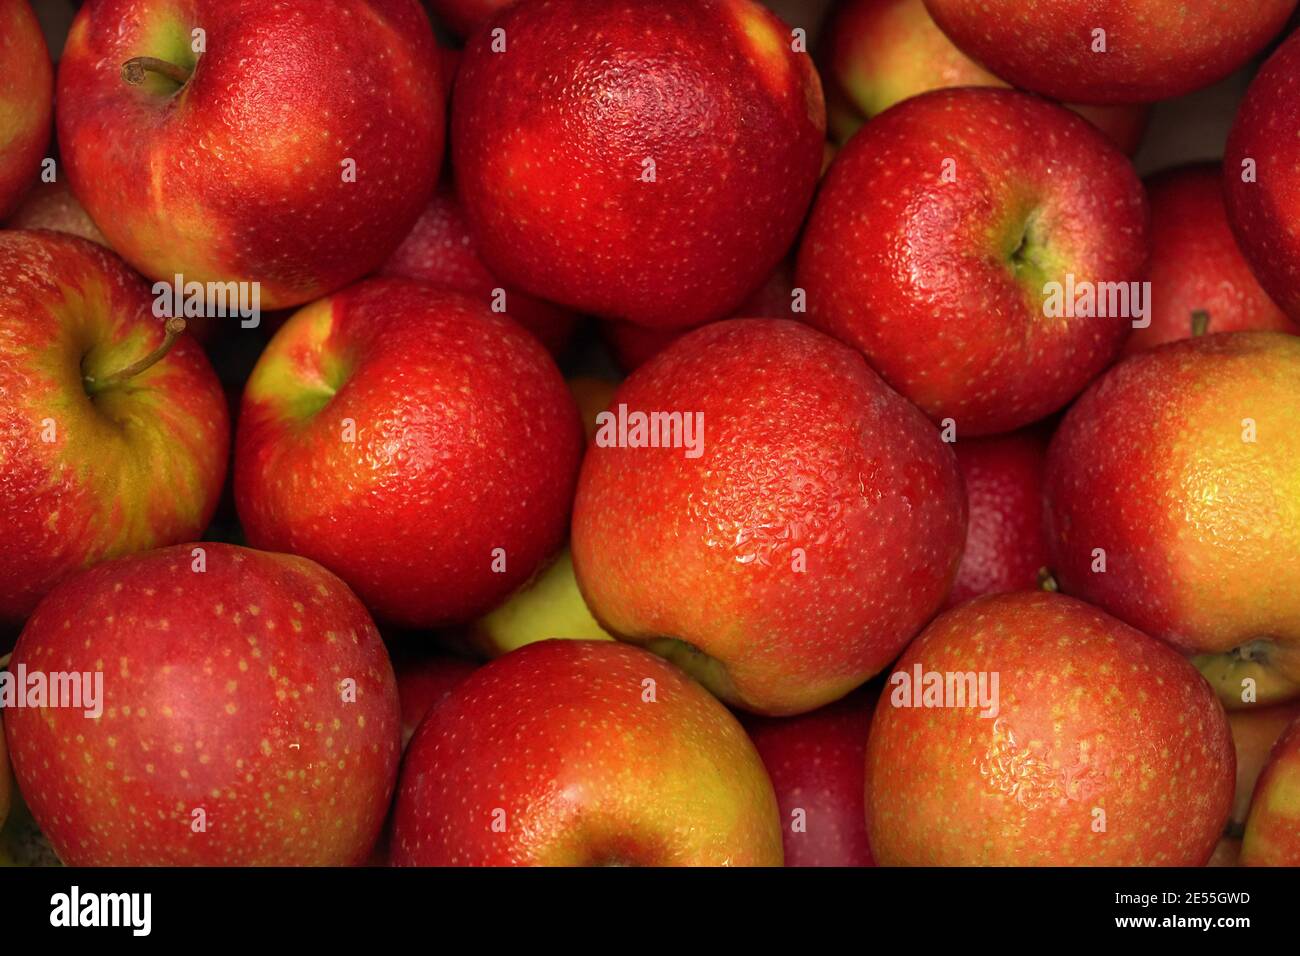 Free picture: apples, greenish yellow, apple, fresh, organic, close-up,  food, produce, health, vitamin